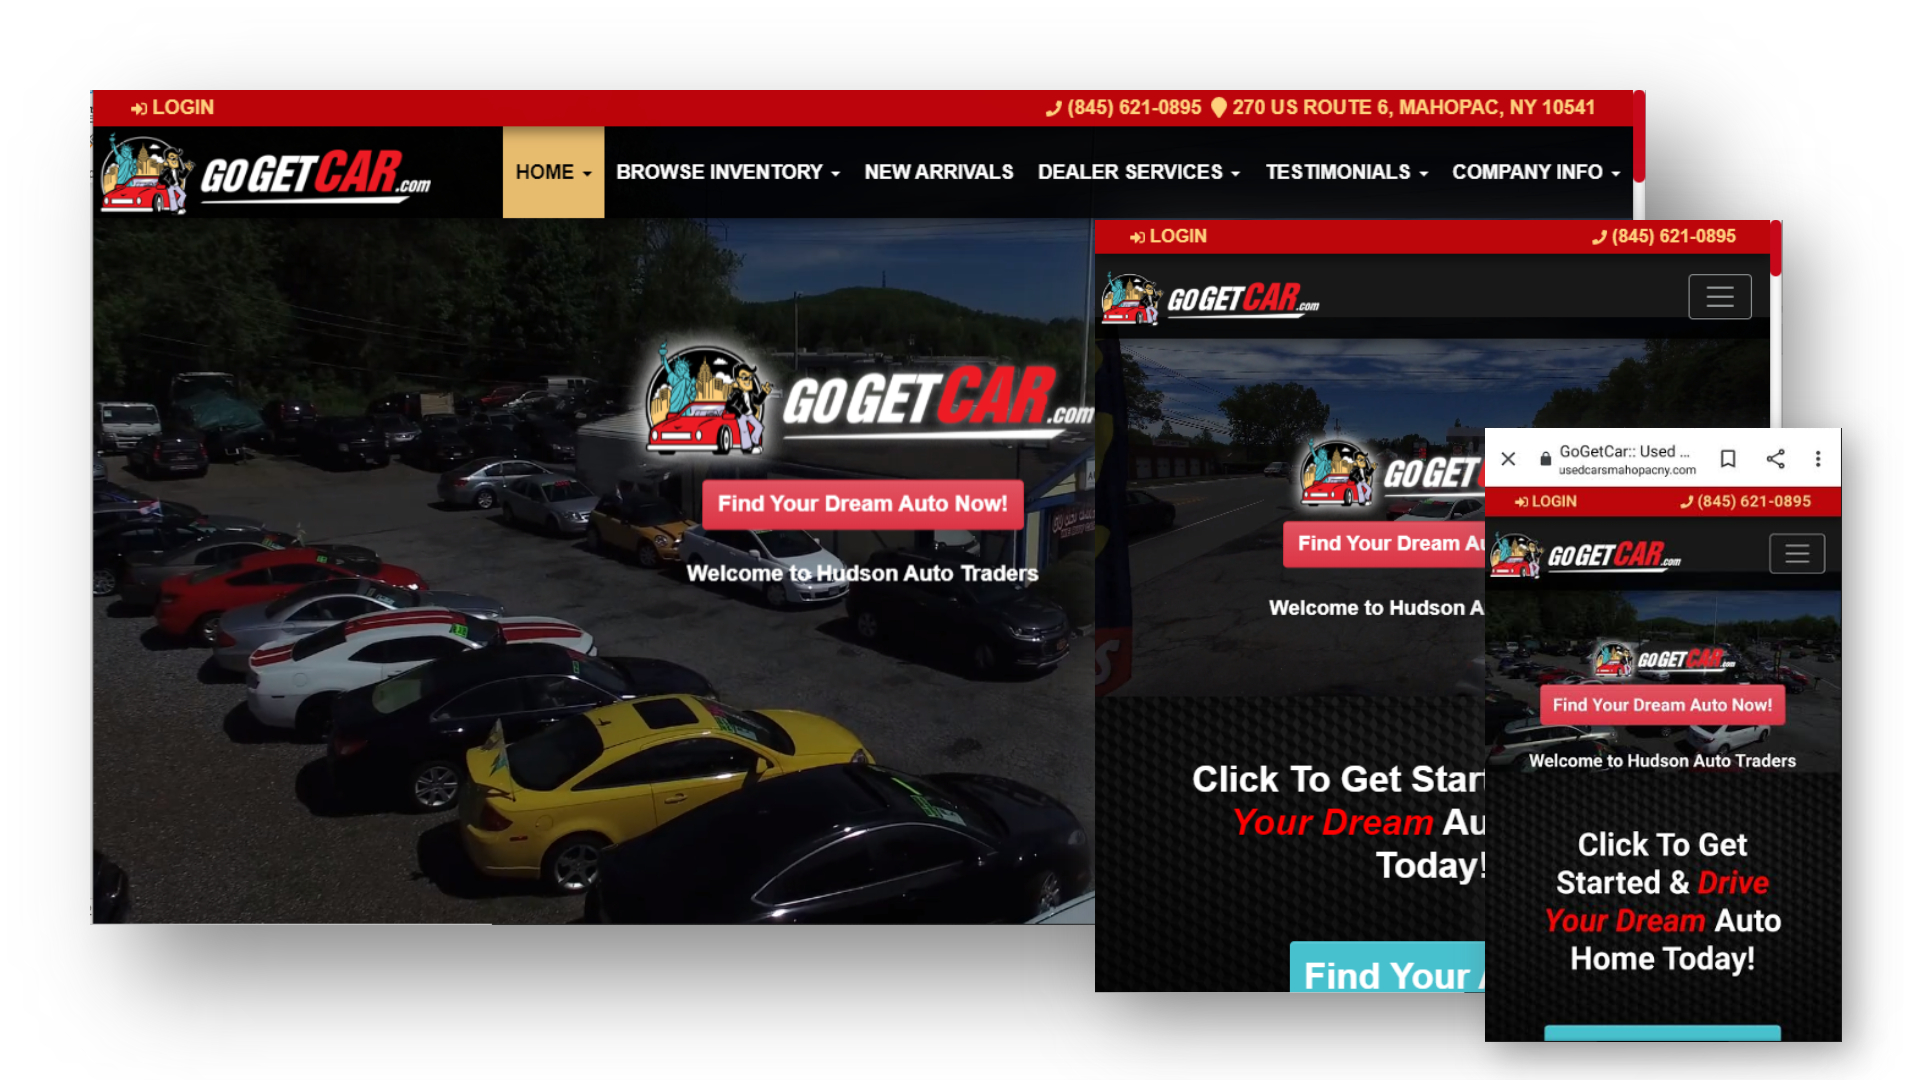 Mobile Auto Dealer Website Software